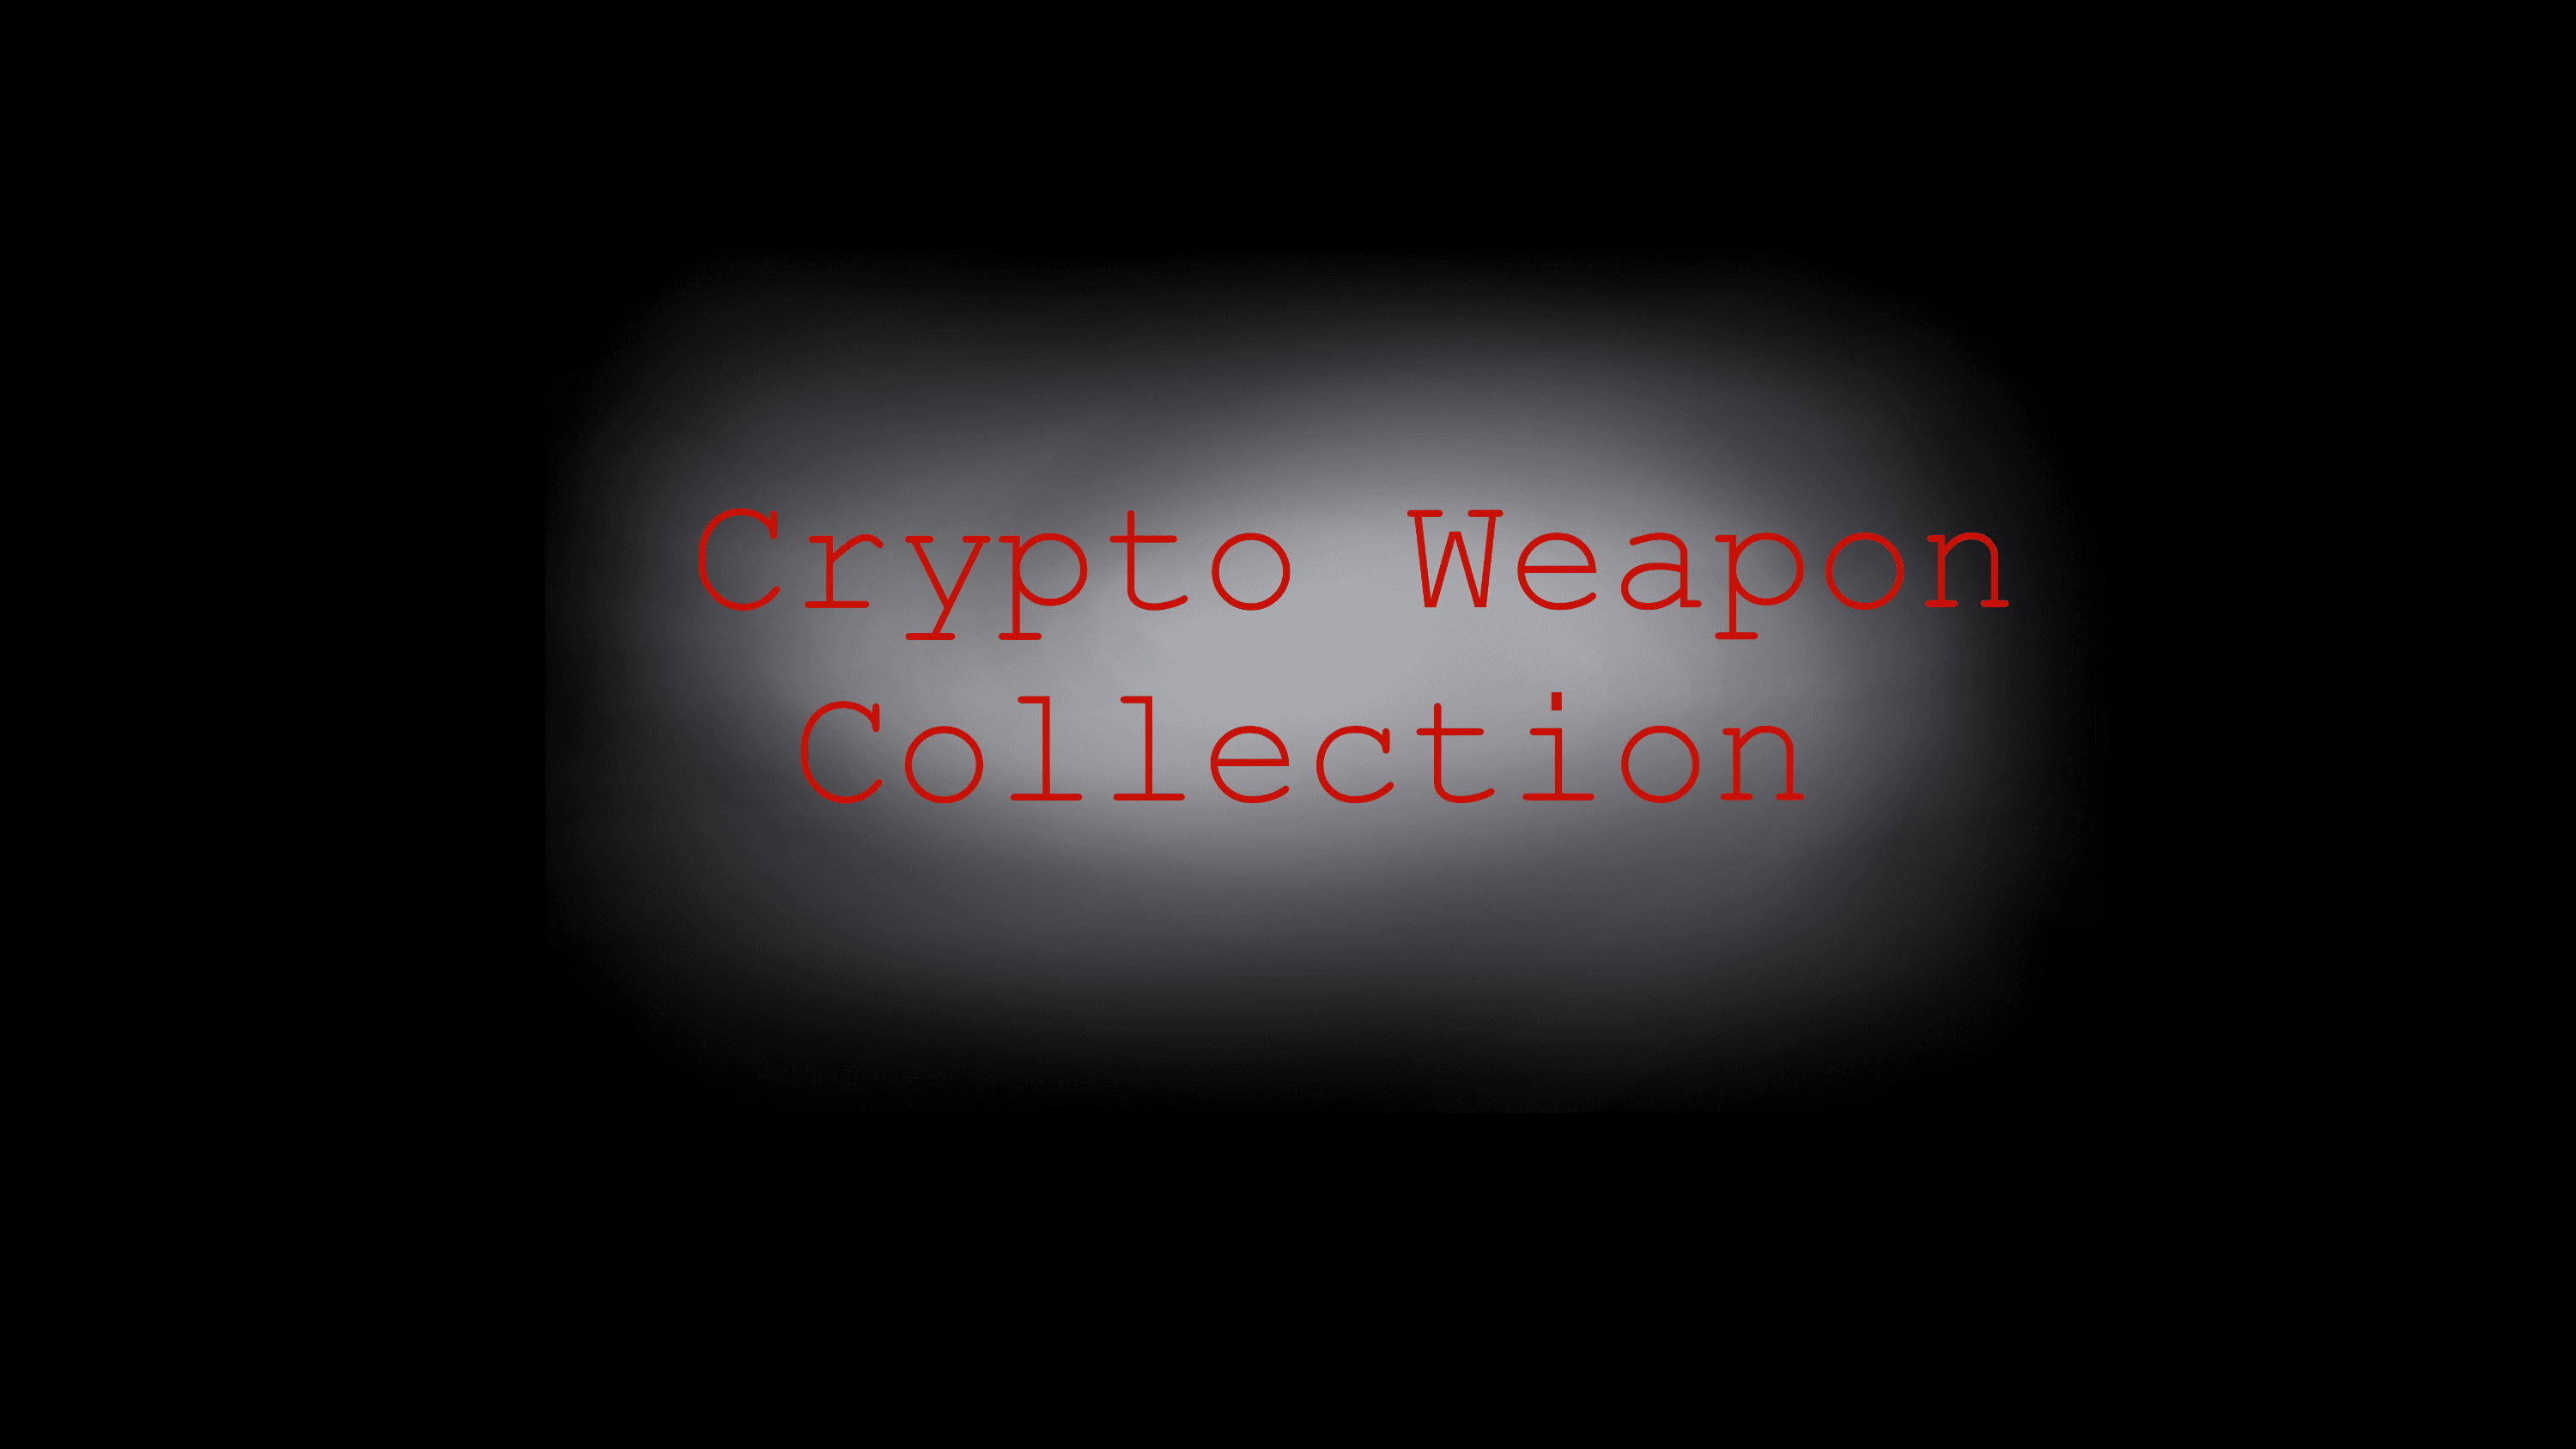 Crypto_Weapons バナー